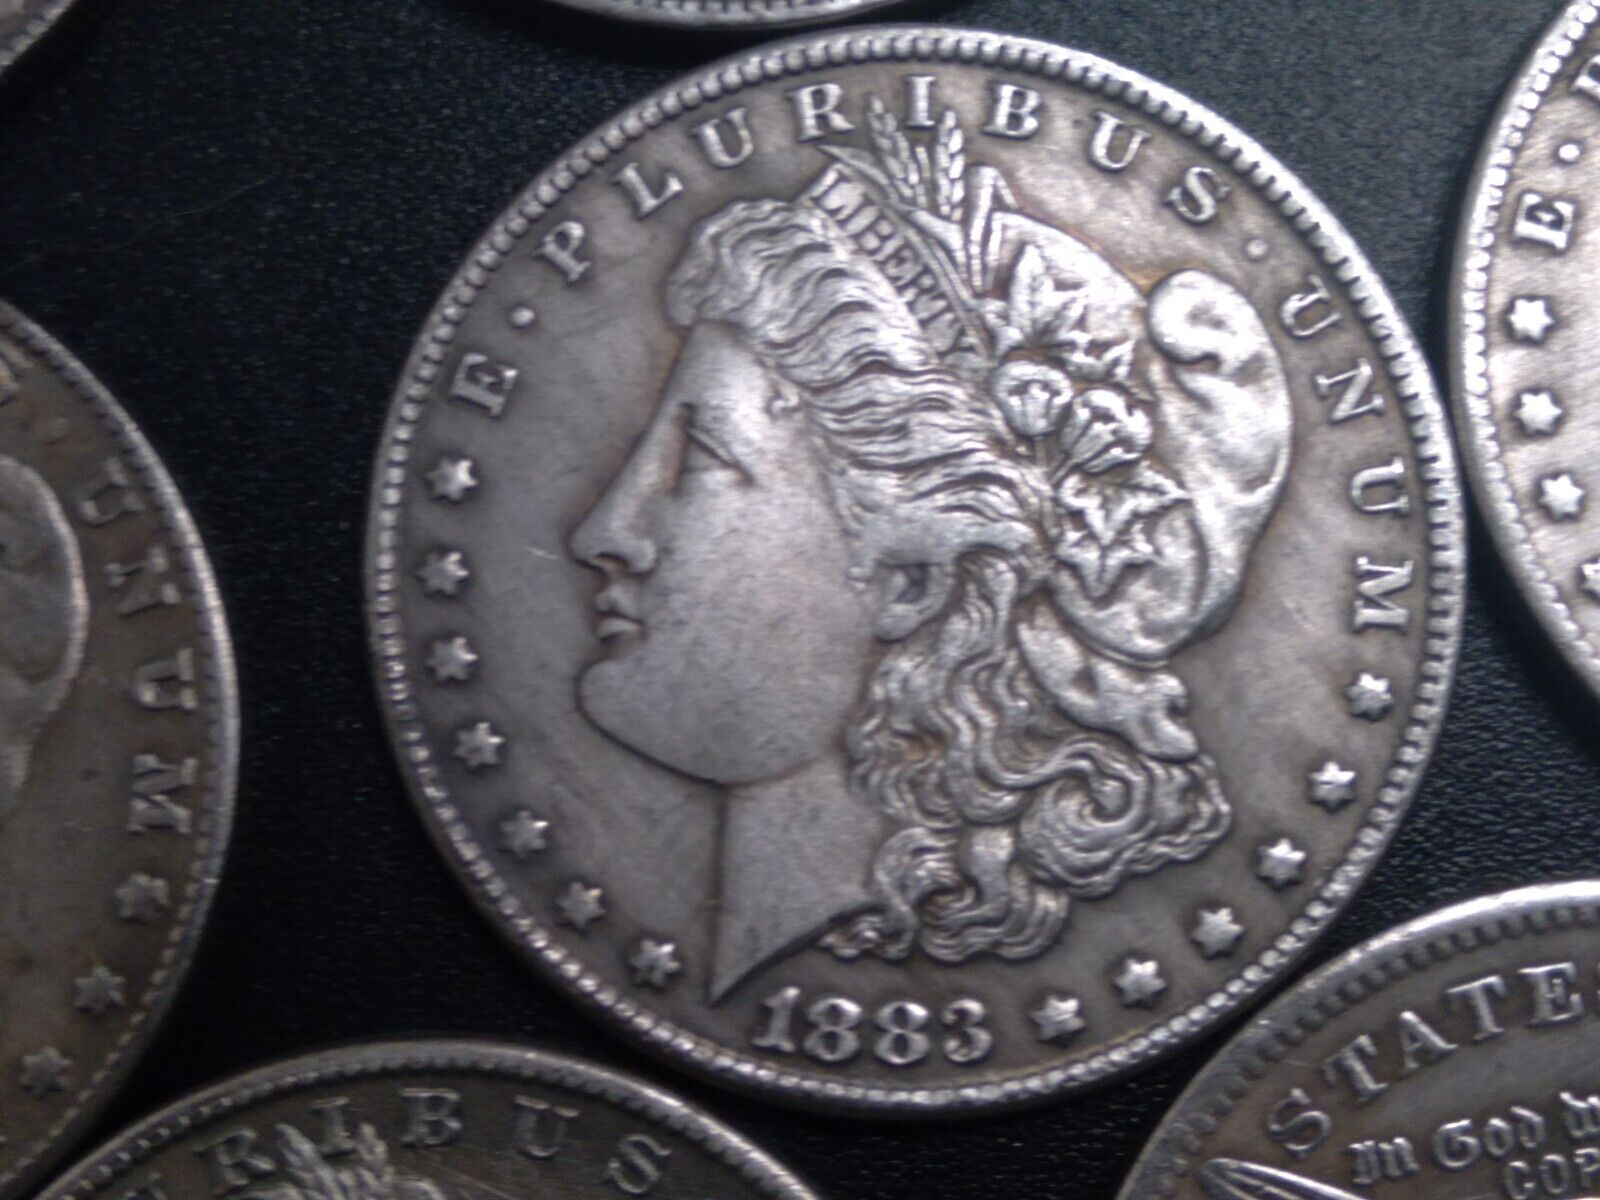 1888 Morgan Silver Dollar Replica Coin Eagle on Reverse Outstanding Quality